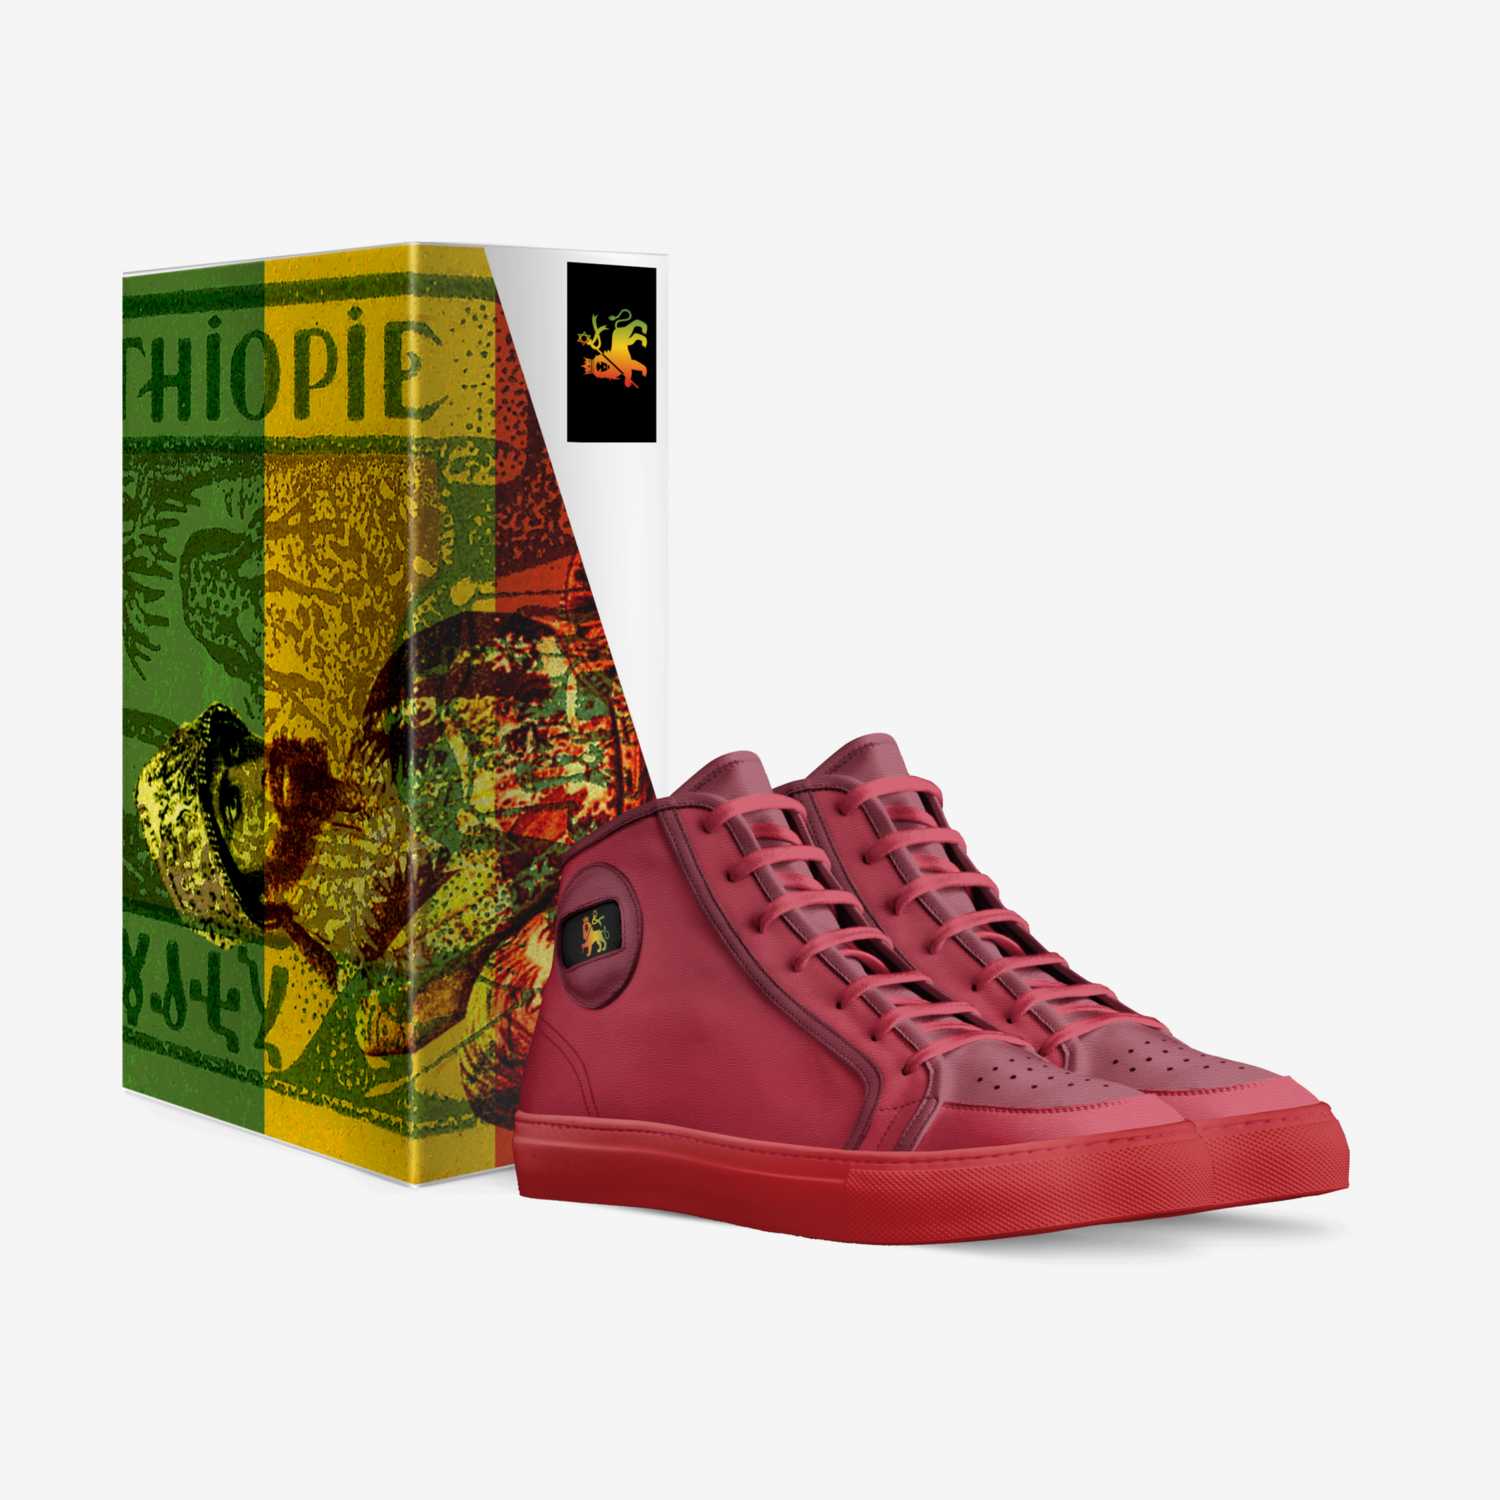 Rasta Blood custom made in Italy shoes by Rasta Gear Shop | Box view